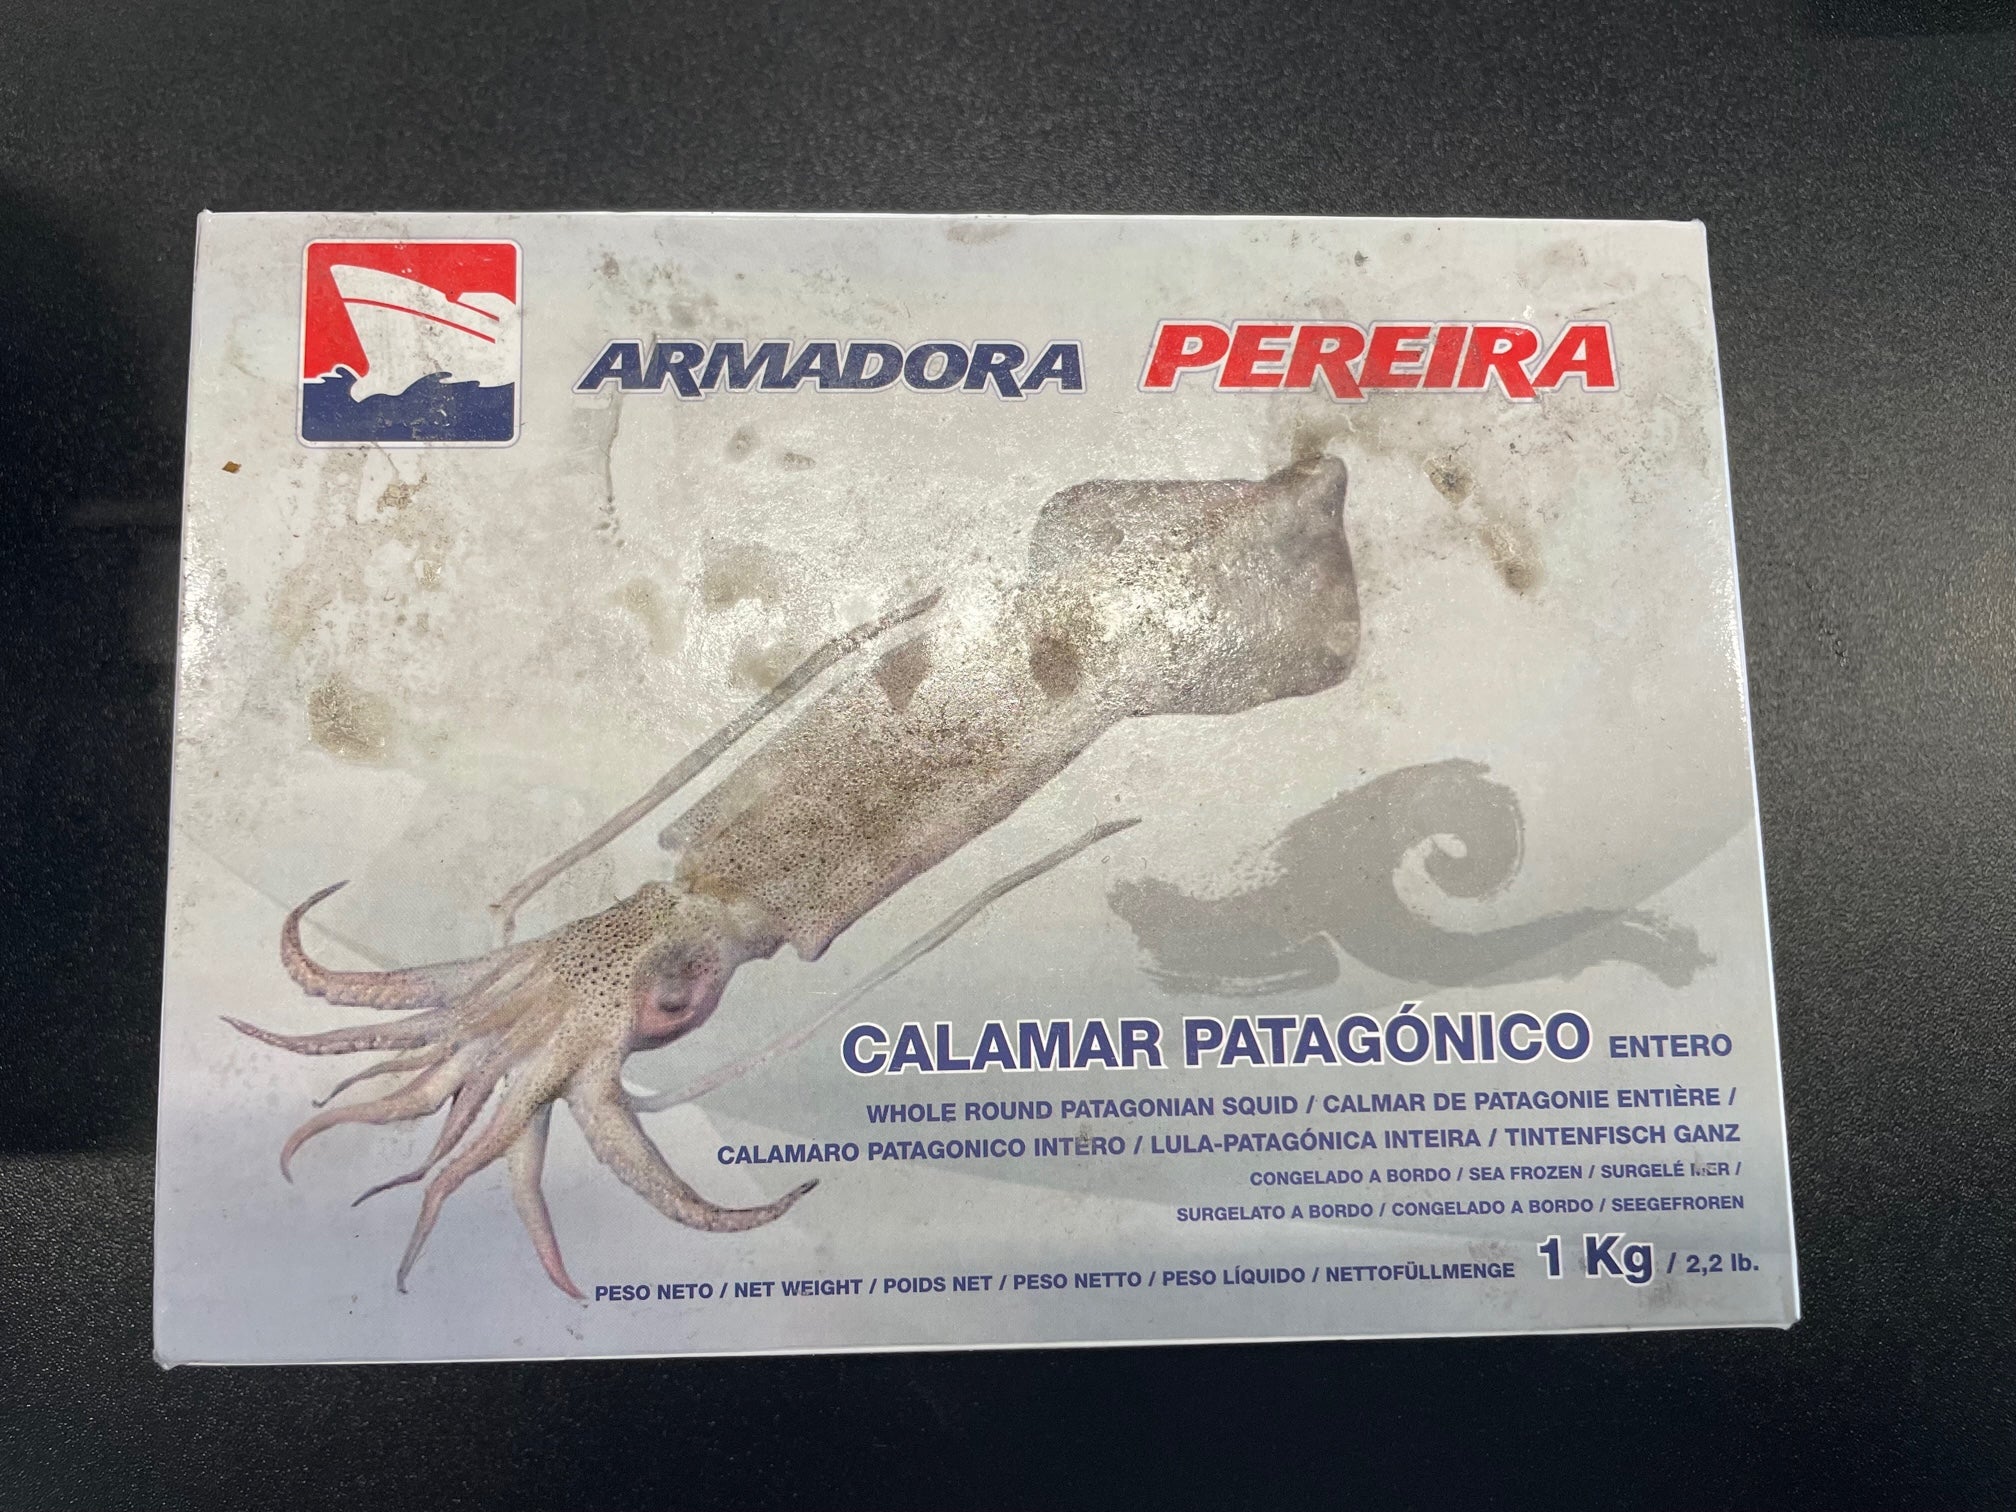 Calamar patagonico entero, 1kg